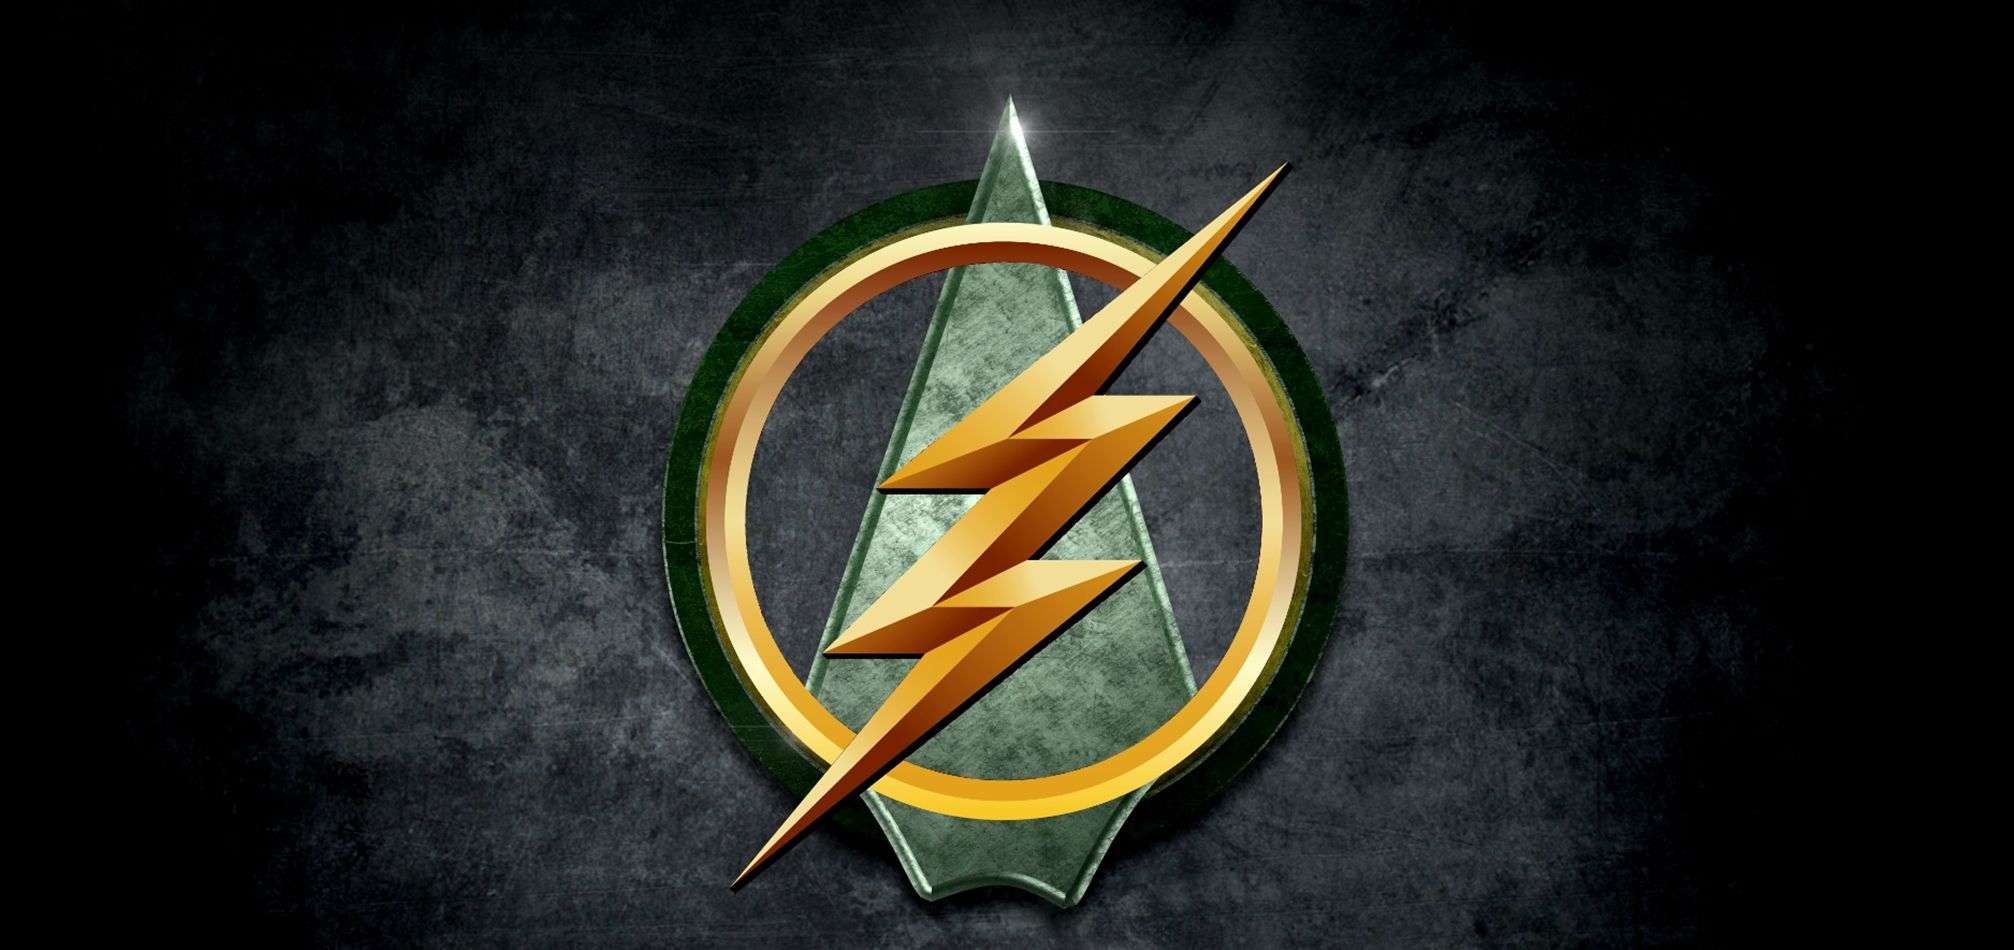 The Flash Season Episode Trailer Vs Arrow